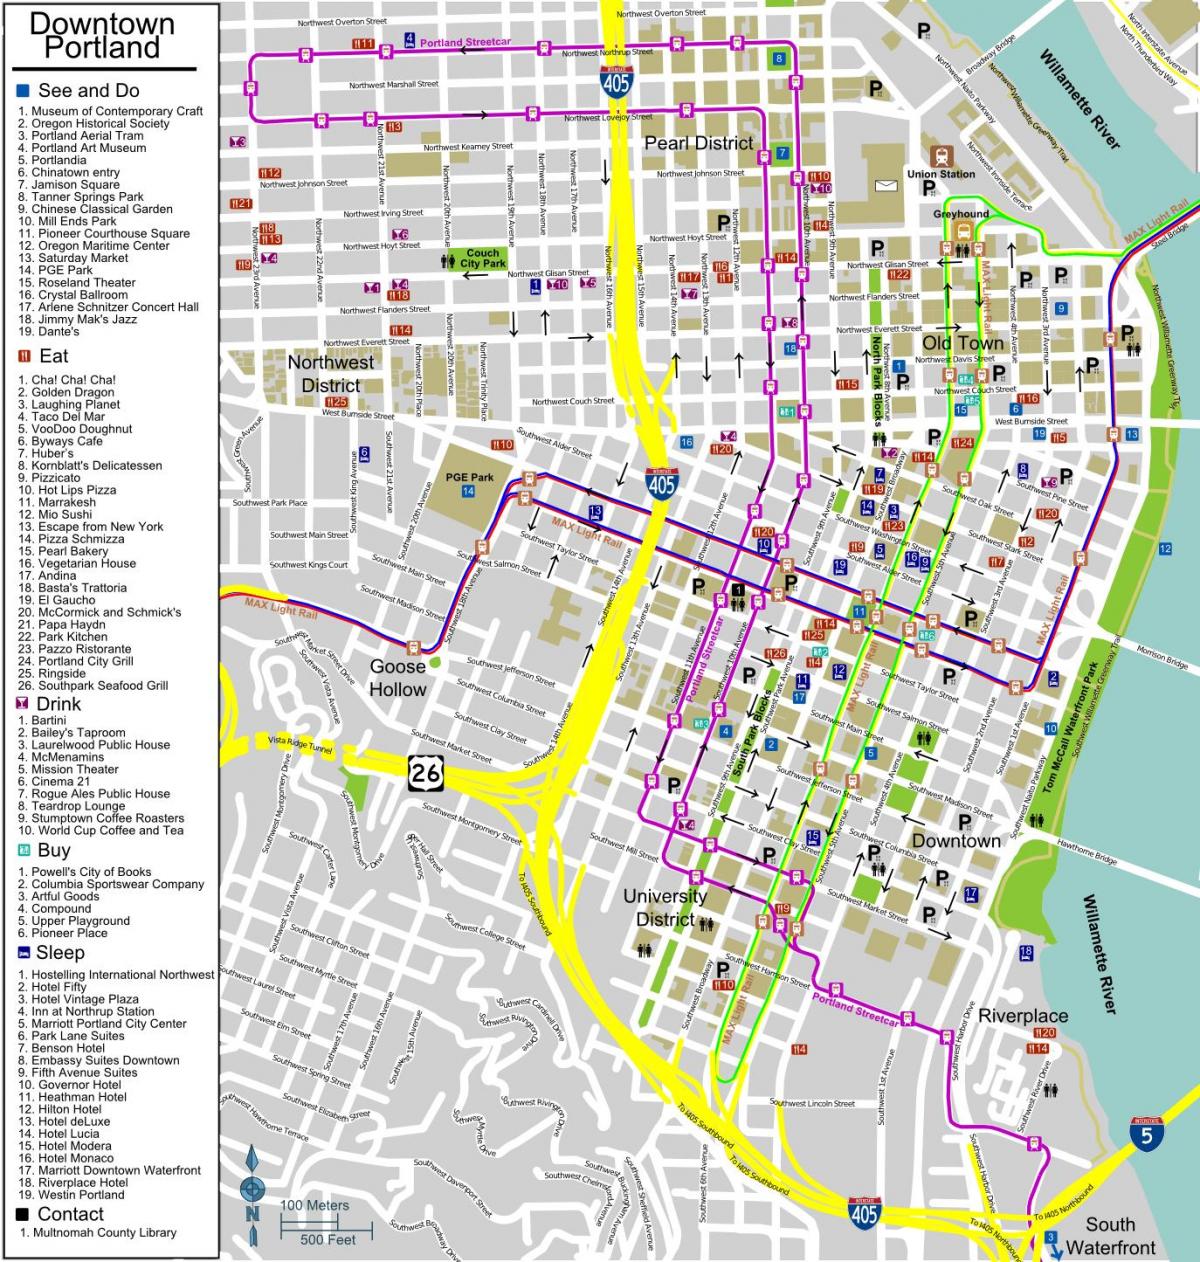 zemljevid Portland ulica